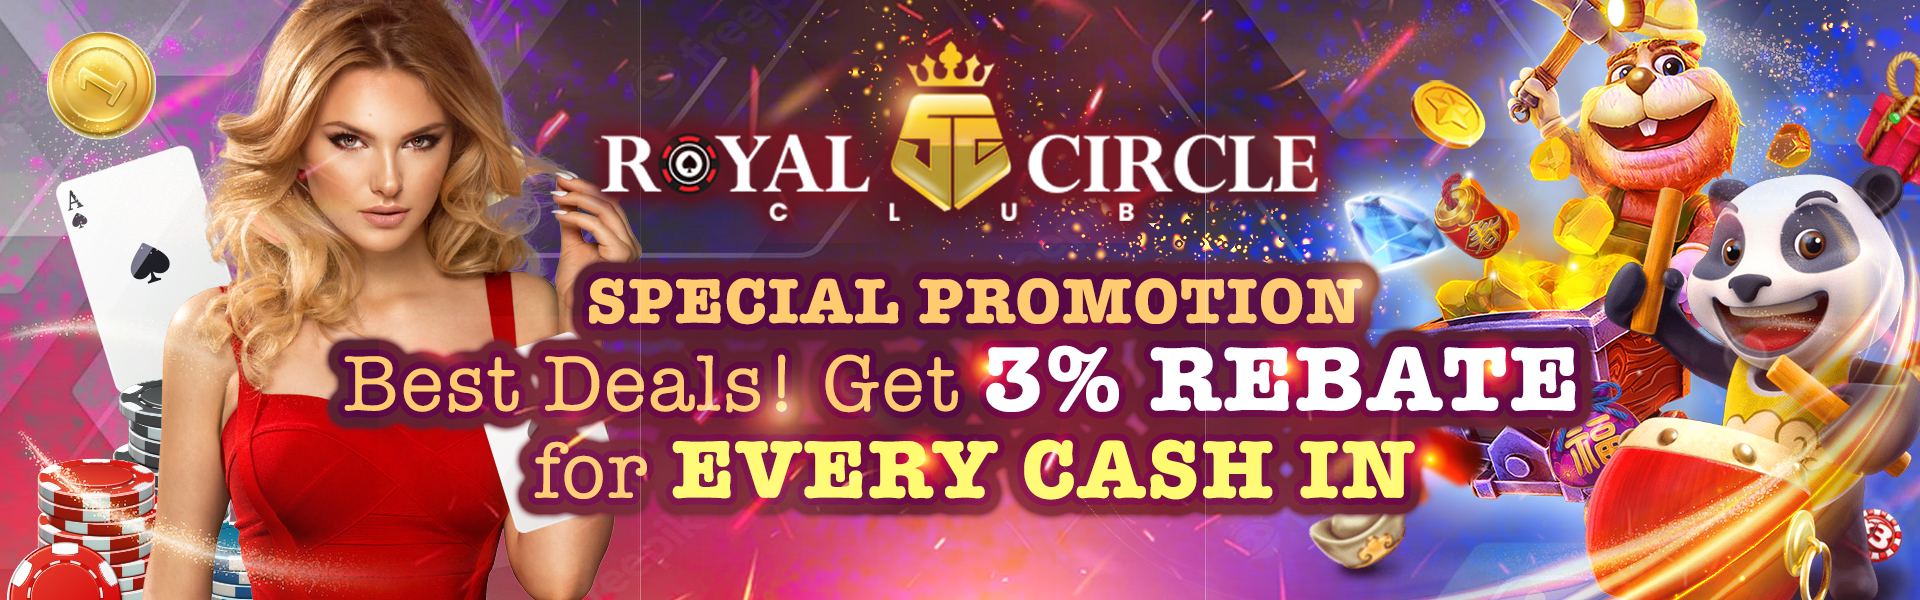 Royal Circle Club - Welcome 3 - royalcc1.com